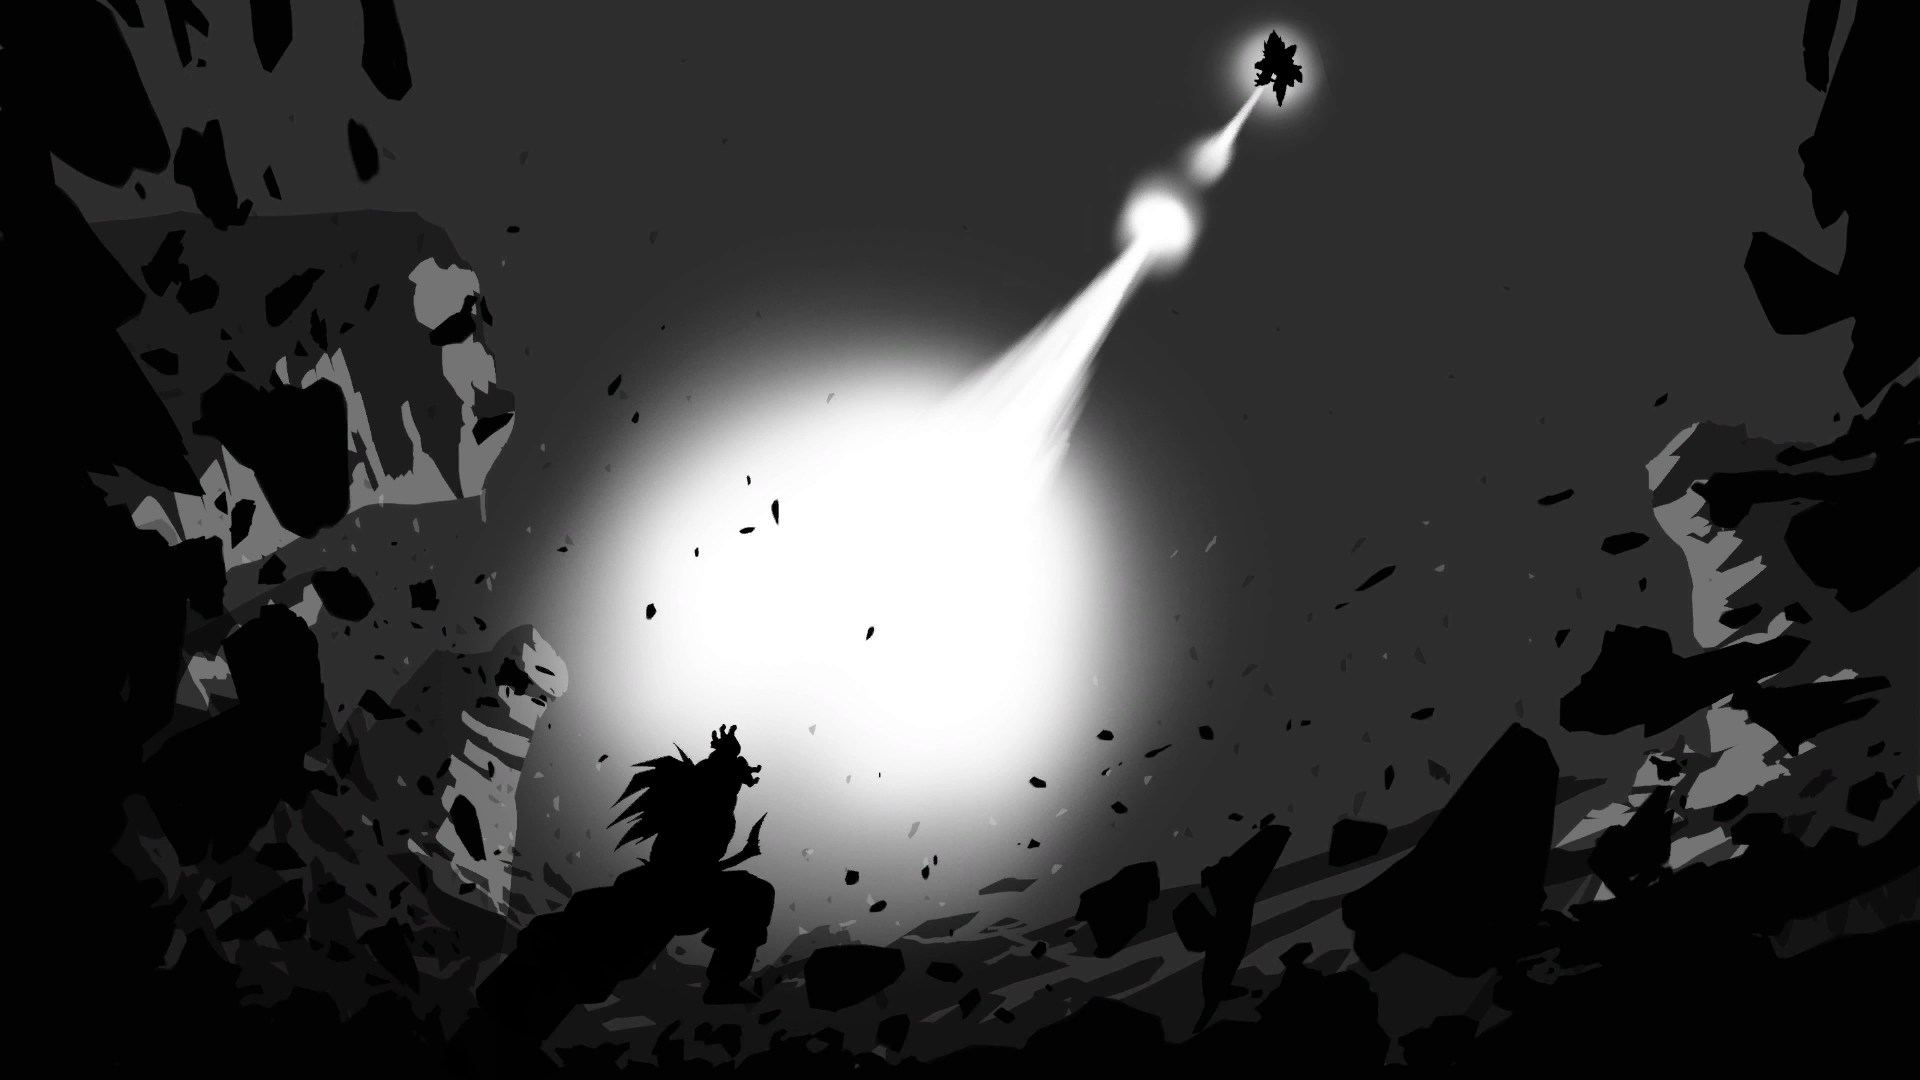 Goku vs Vegeta Wallpaper [Xenoverse 2] by Maxiuchiha22 on DeviantArt